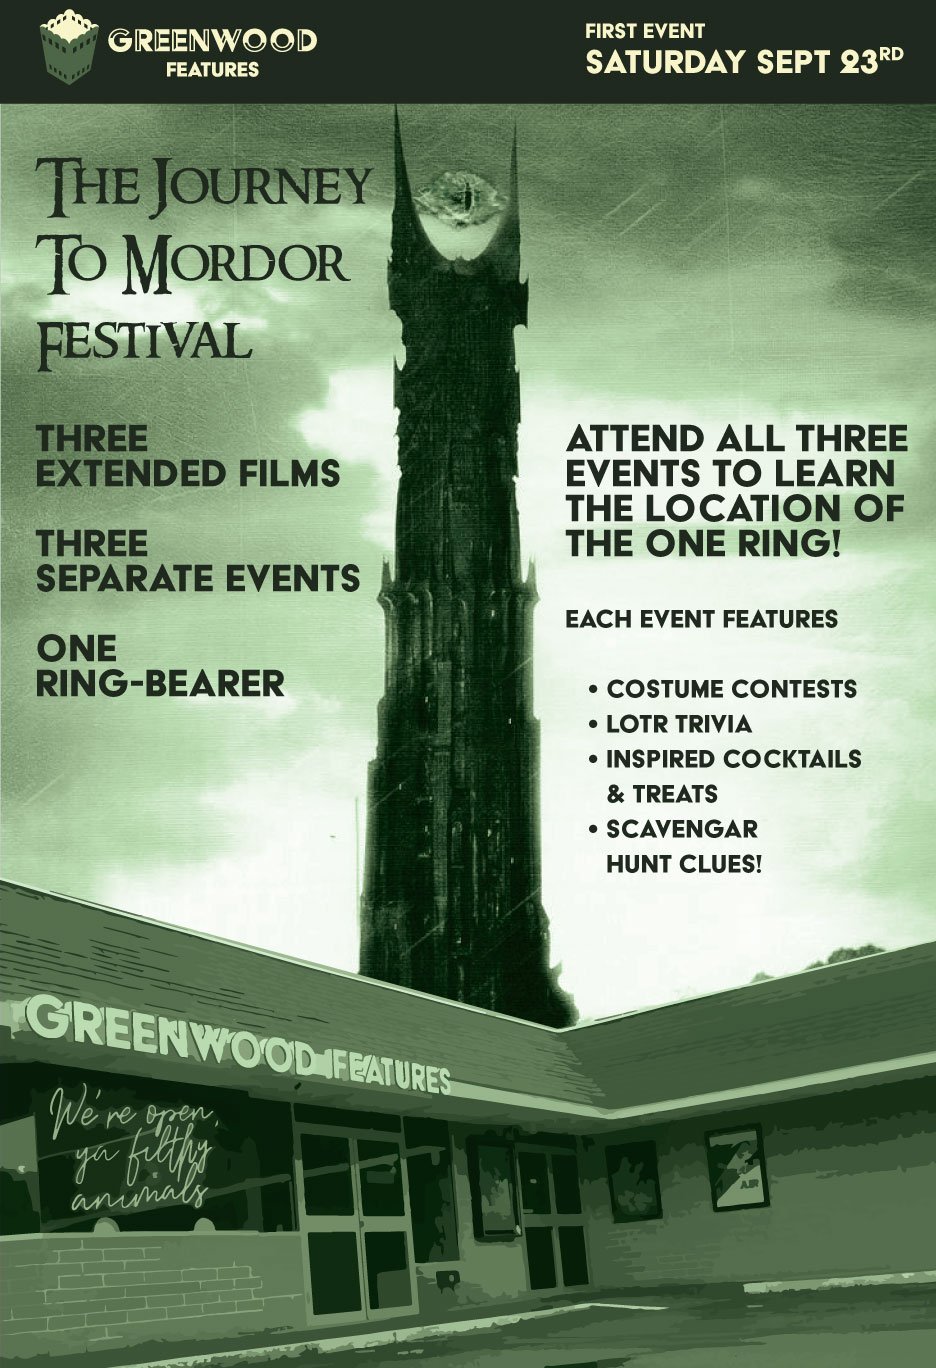 The Journey To Mordor Festival